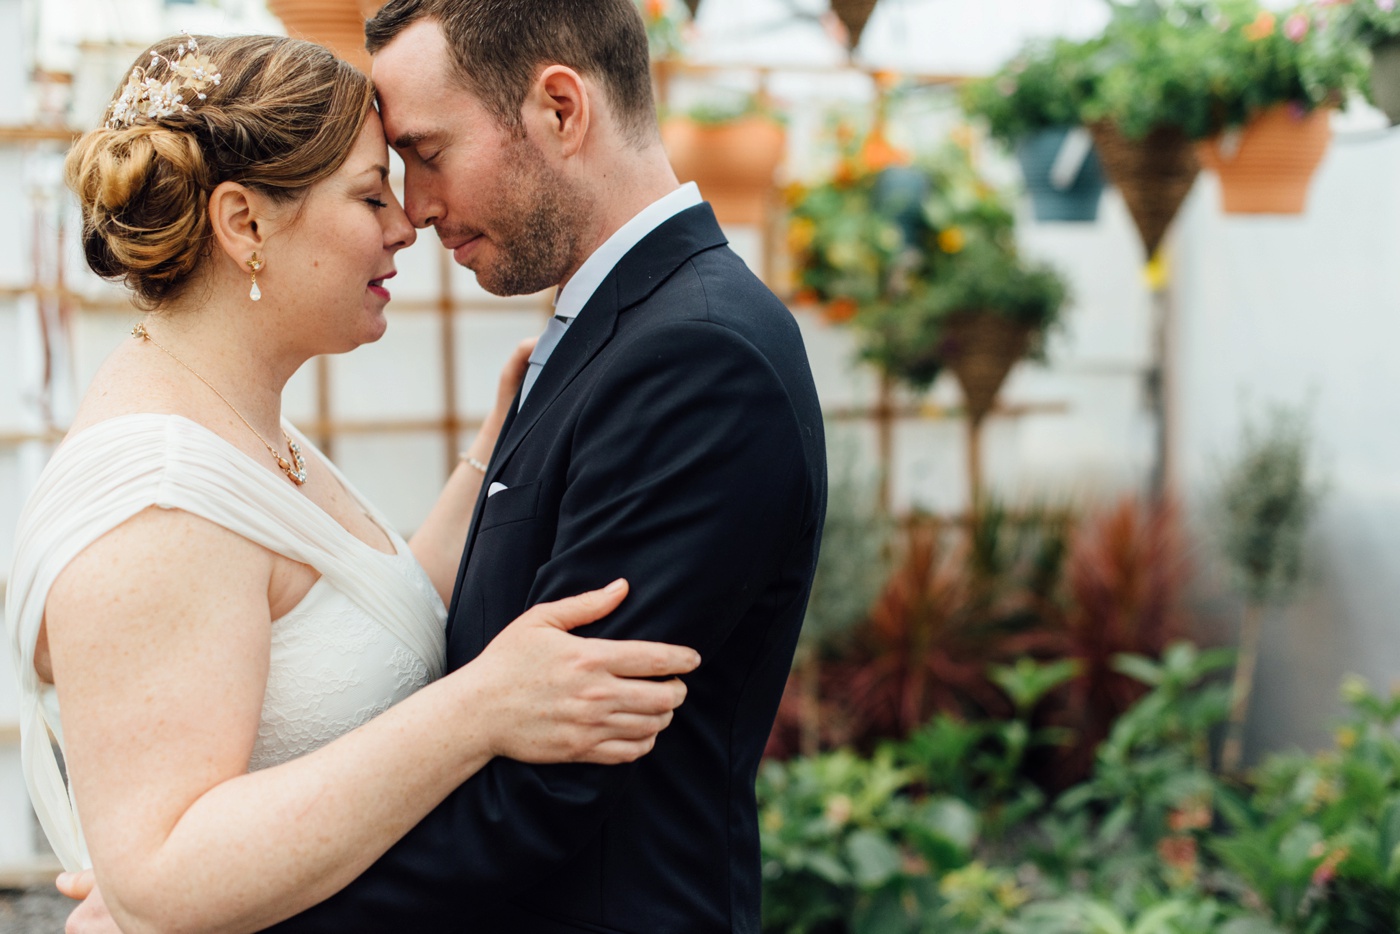 Rachael + Paul - Greensgrow Farms Wedding - Philadelphia Wedding Photographer - Alison Dunn Photography